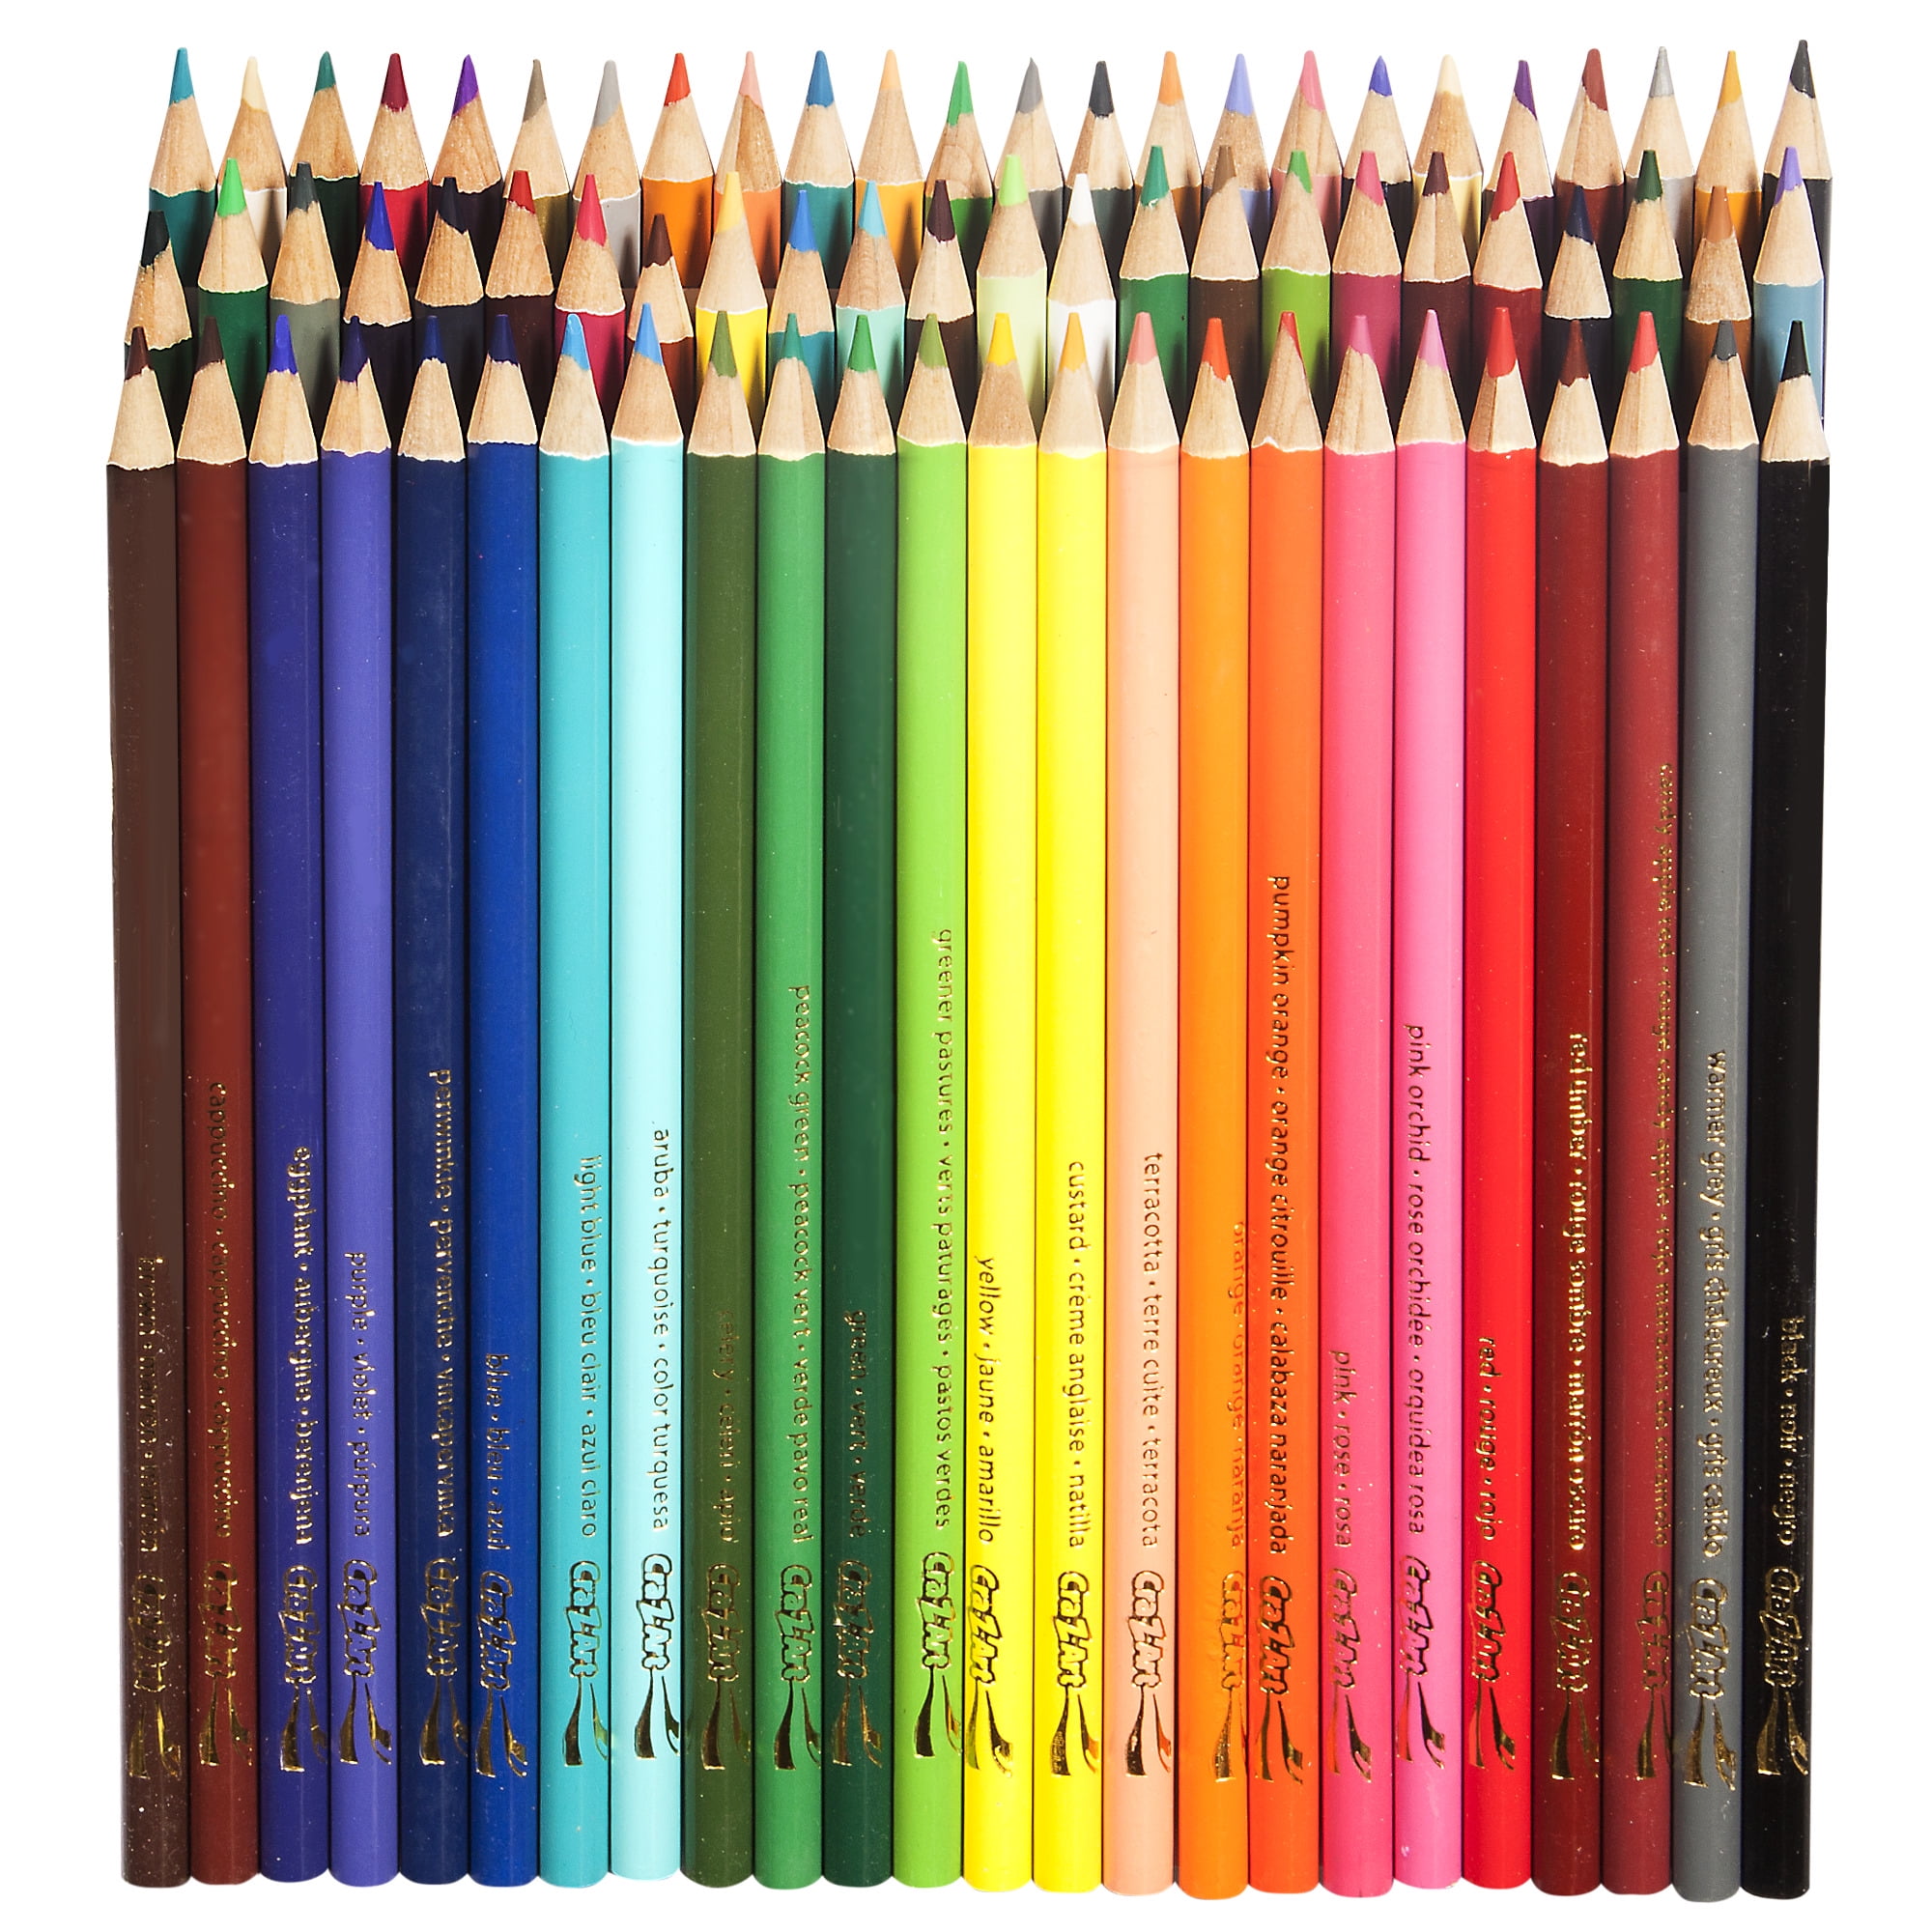 Cra-Z-Art 72 Colored Pencils Review 